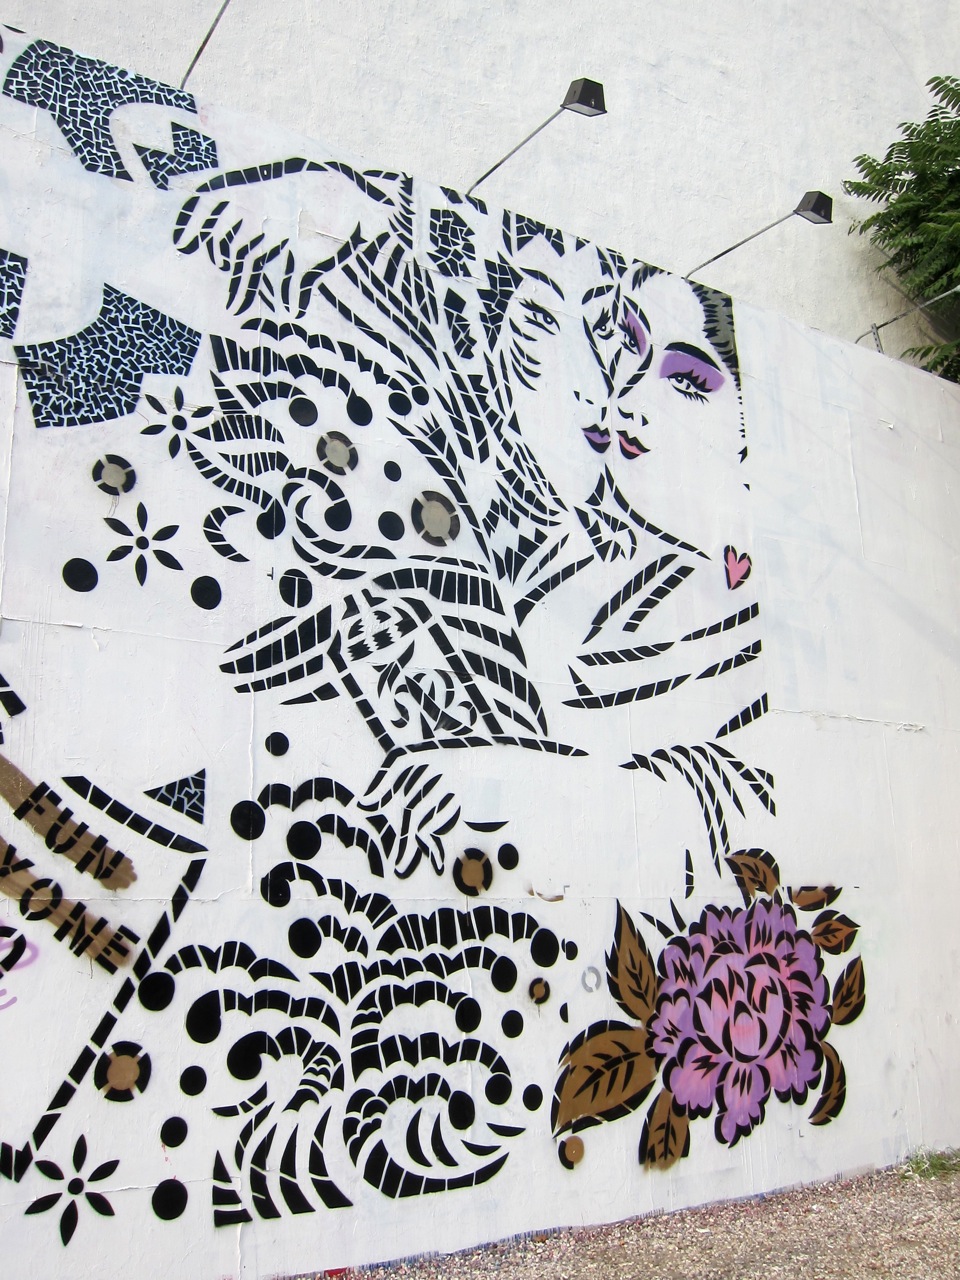 Aiko Houston Bowery Mural AM 1